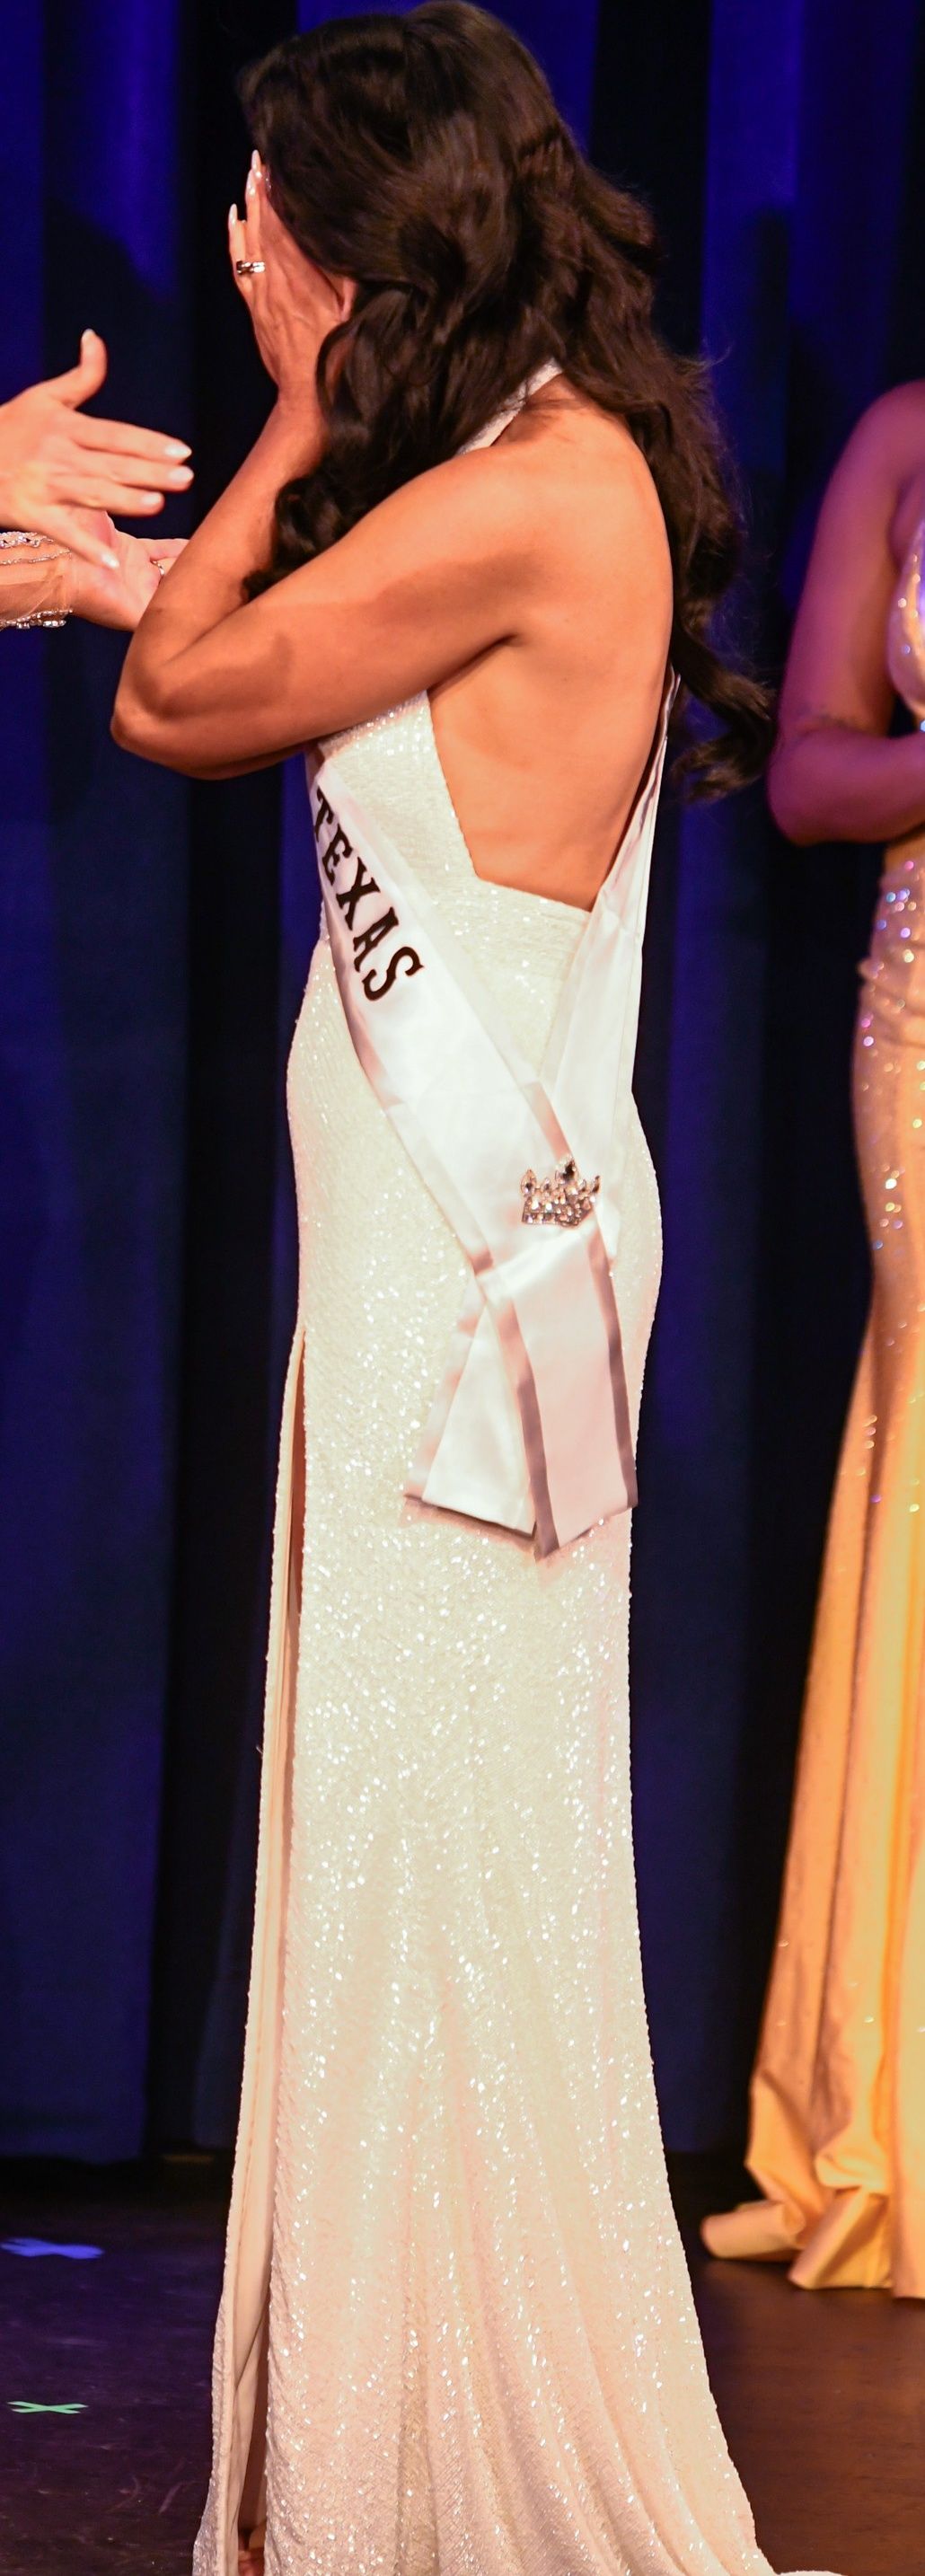 Ashley Lauren Size 6 Pageant Halter White Side Slit Dress on Queenly